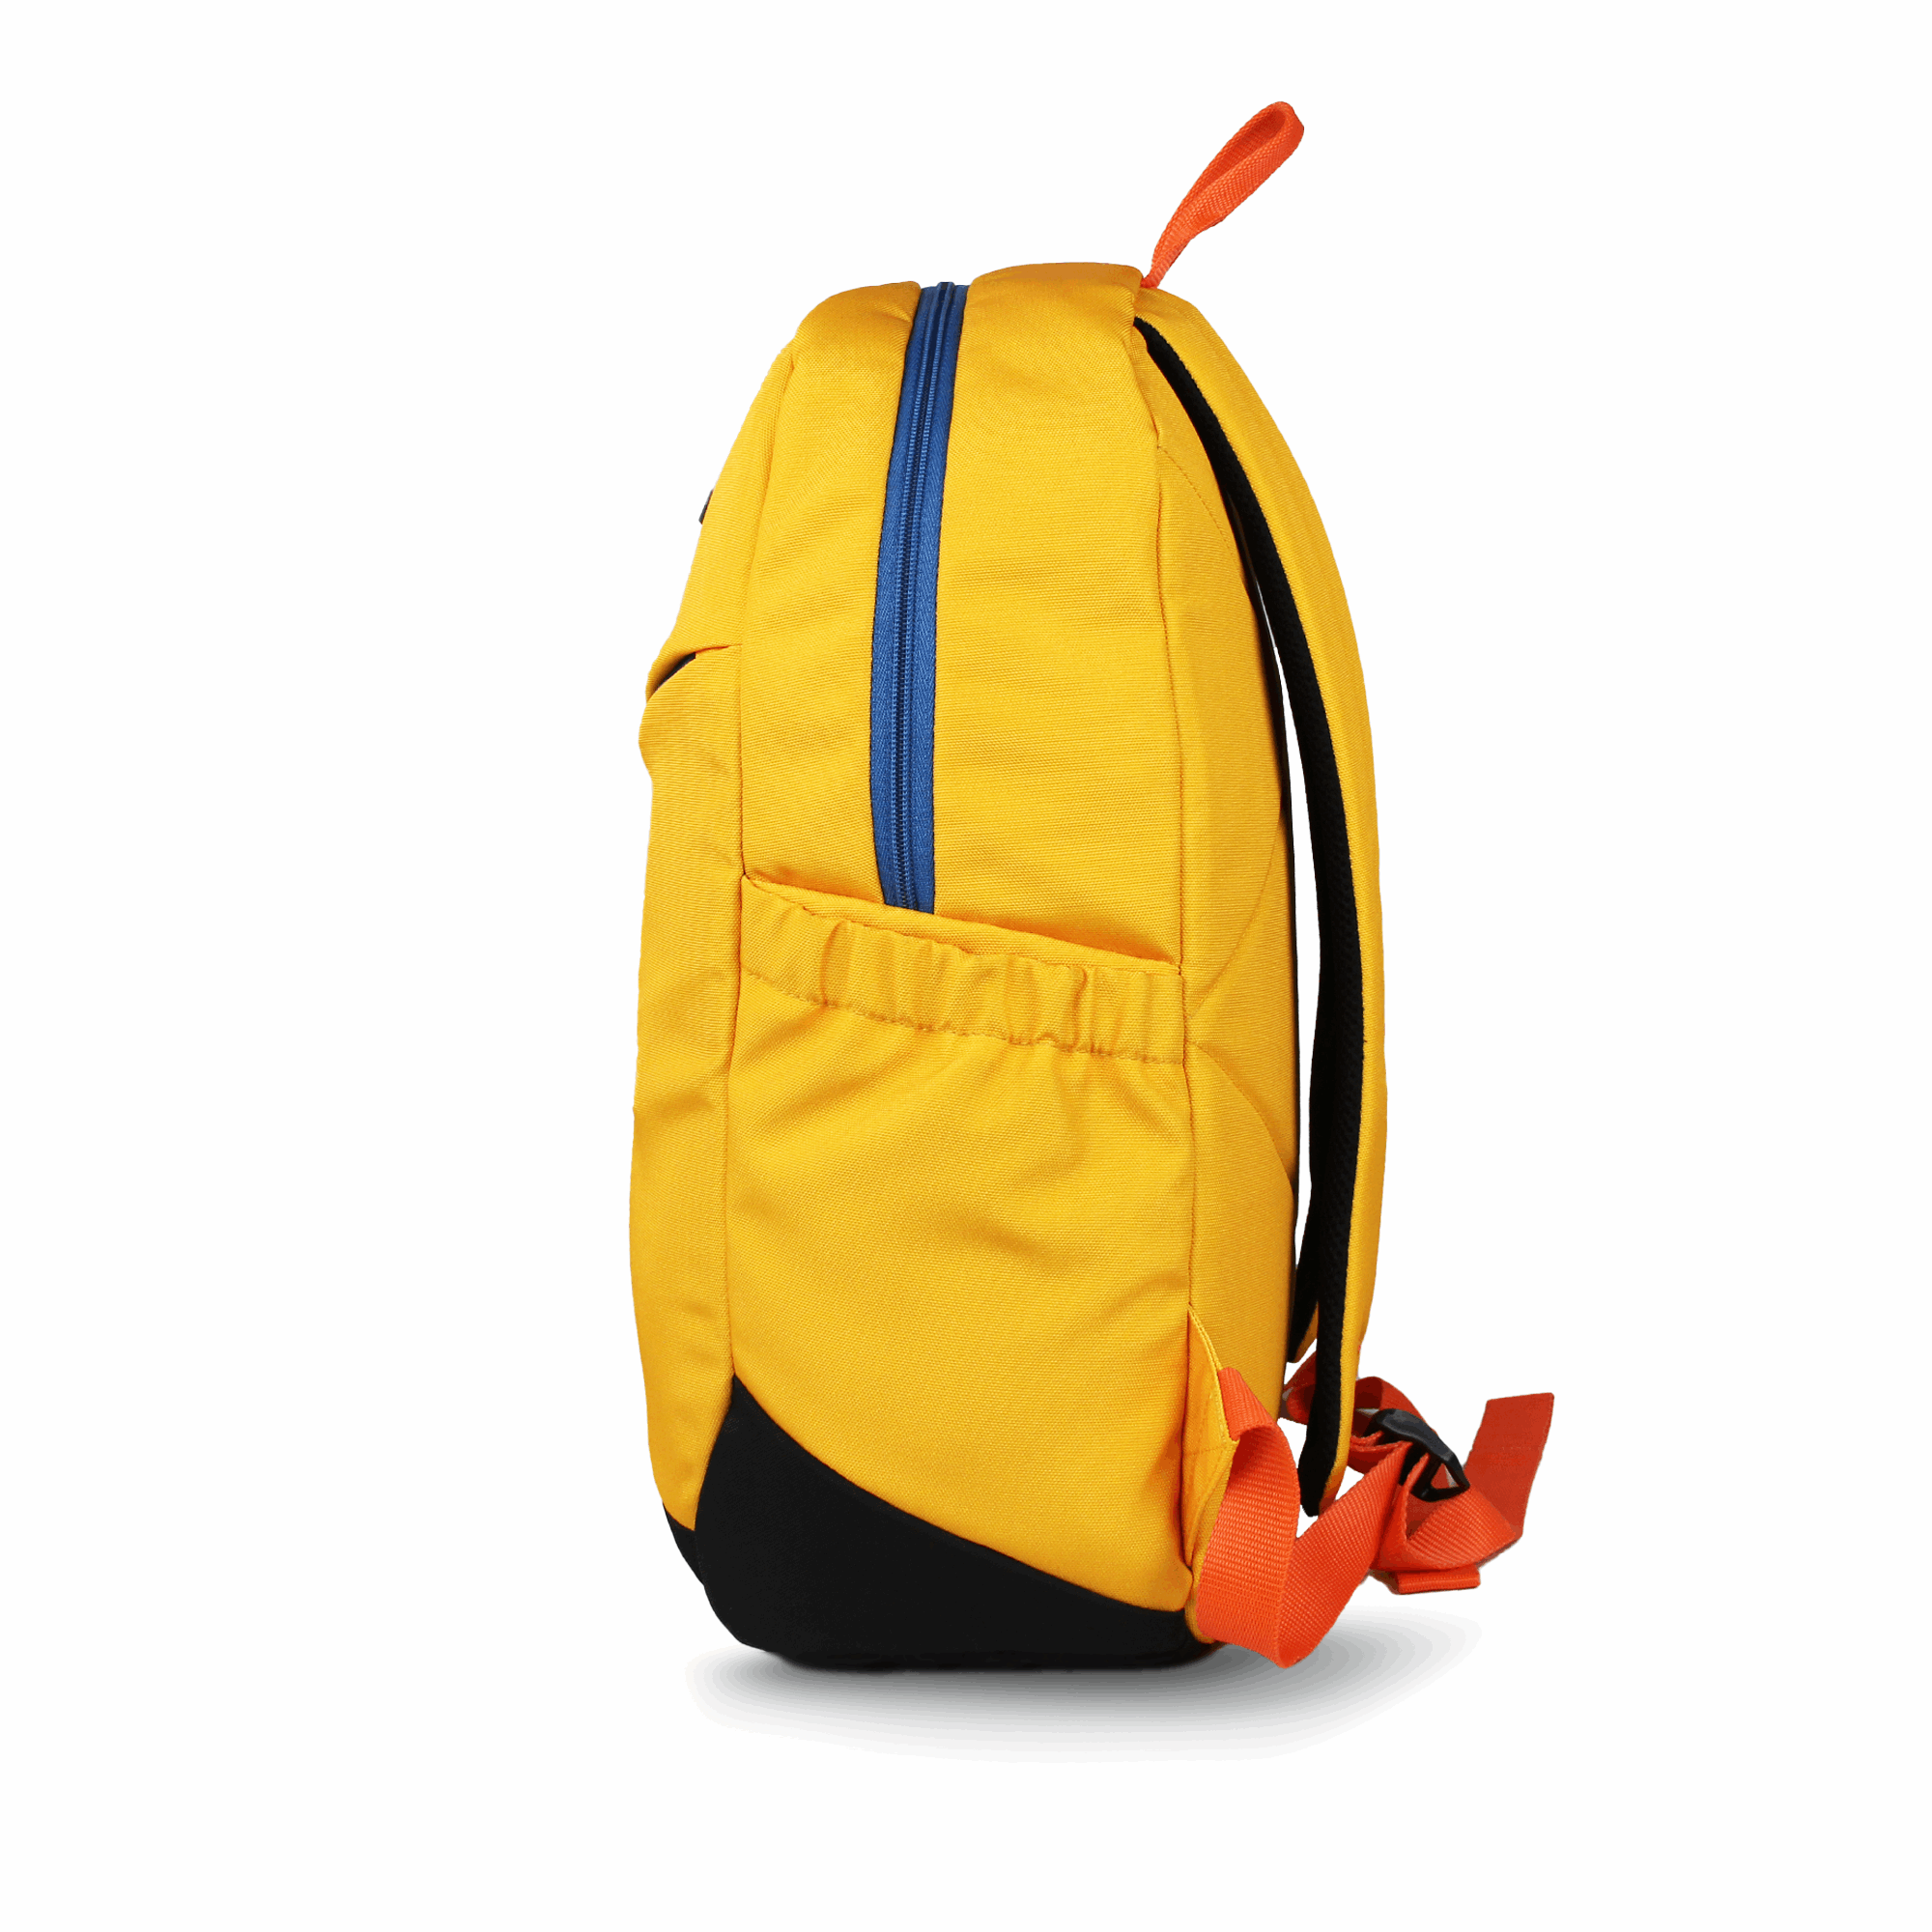 Fineapple Backpack